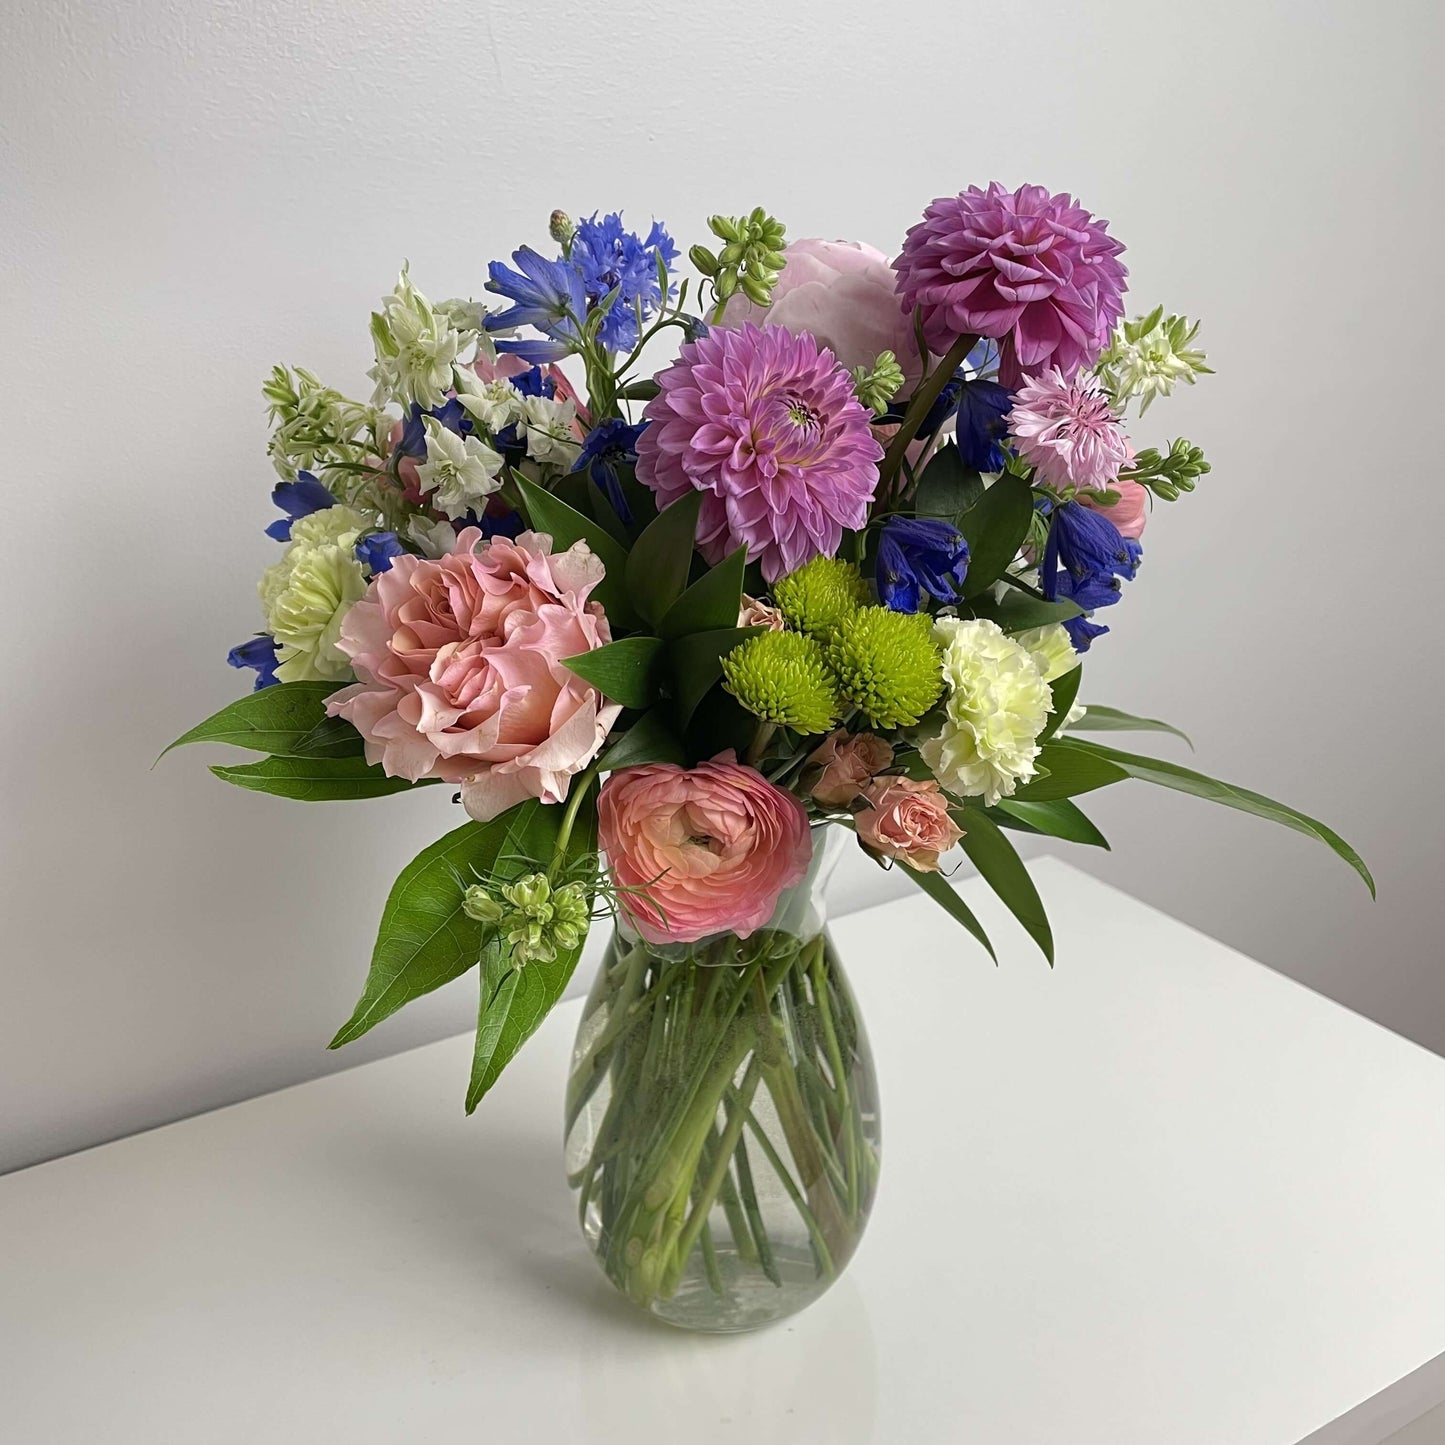 Example of designer's choice small arrangement in vase